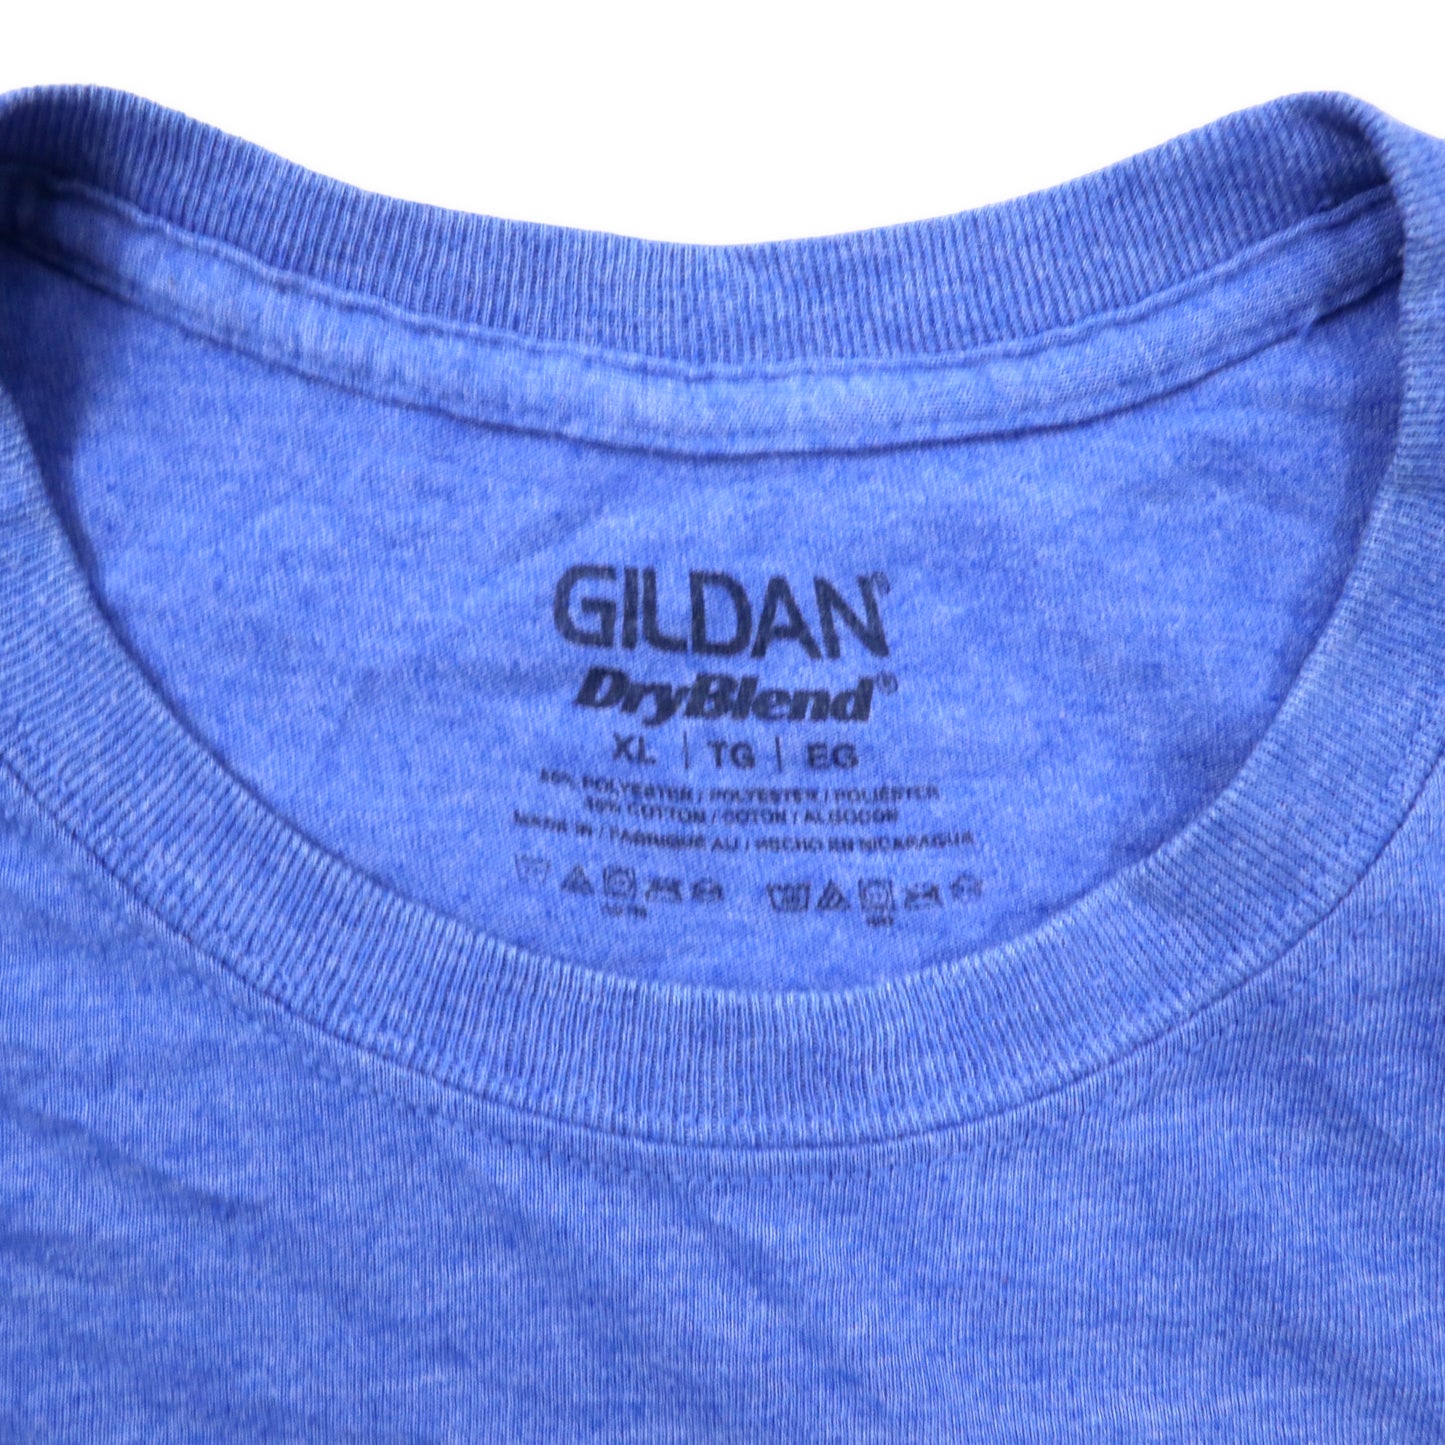 GILDAN レーシングカー プリントTシャツ XL ブルー コットン KASEY KAHNE 両面プリント ビッグサイズ